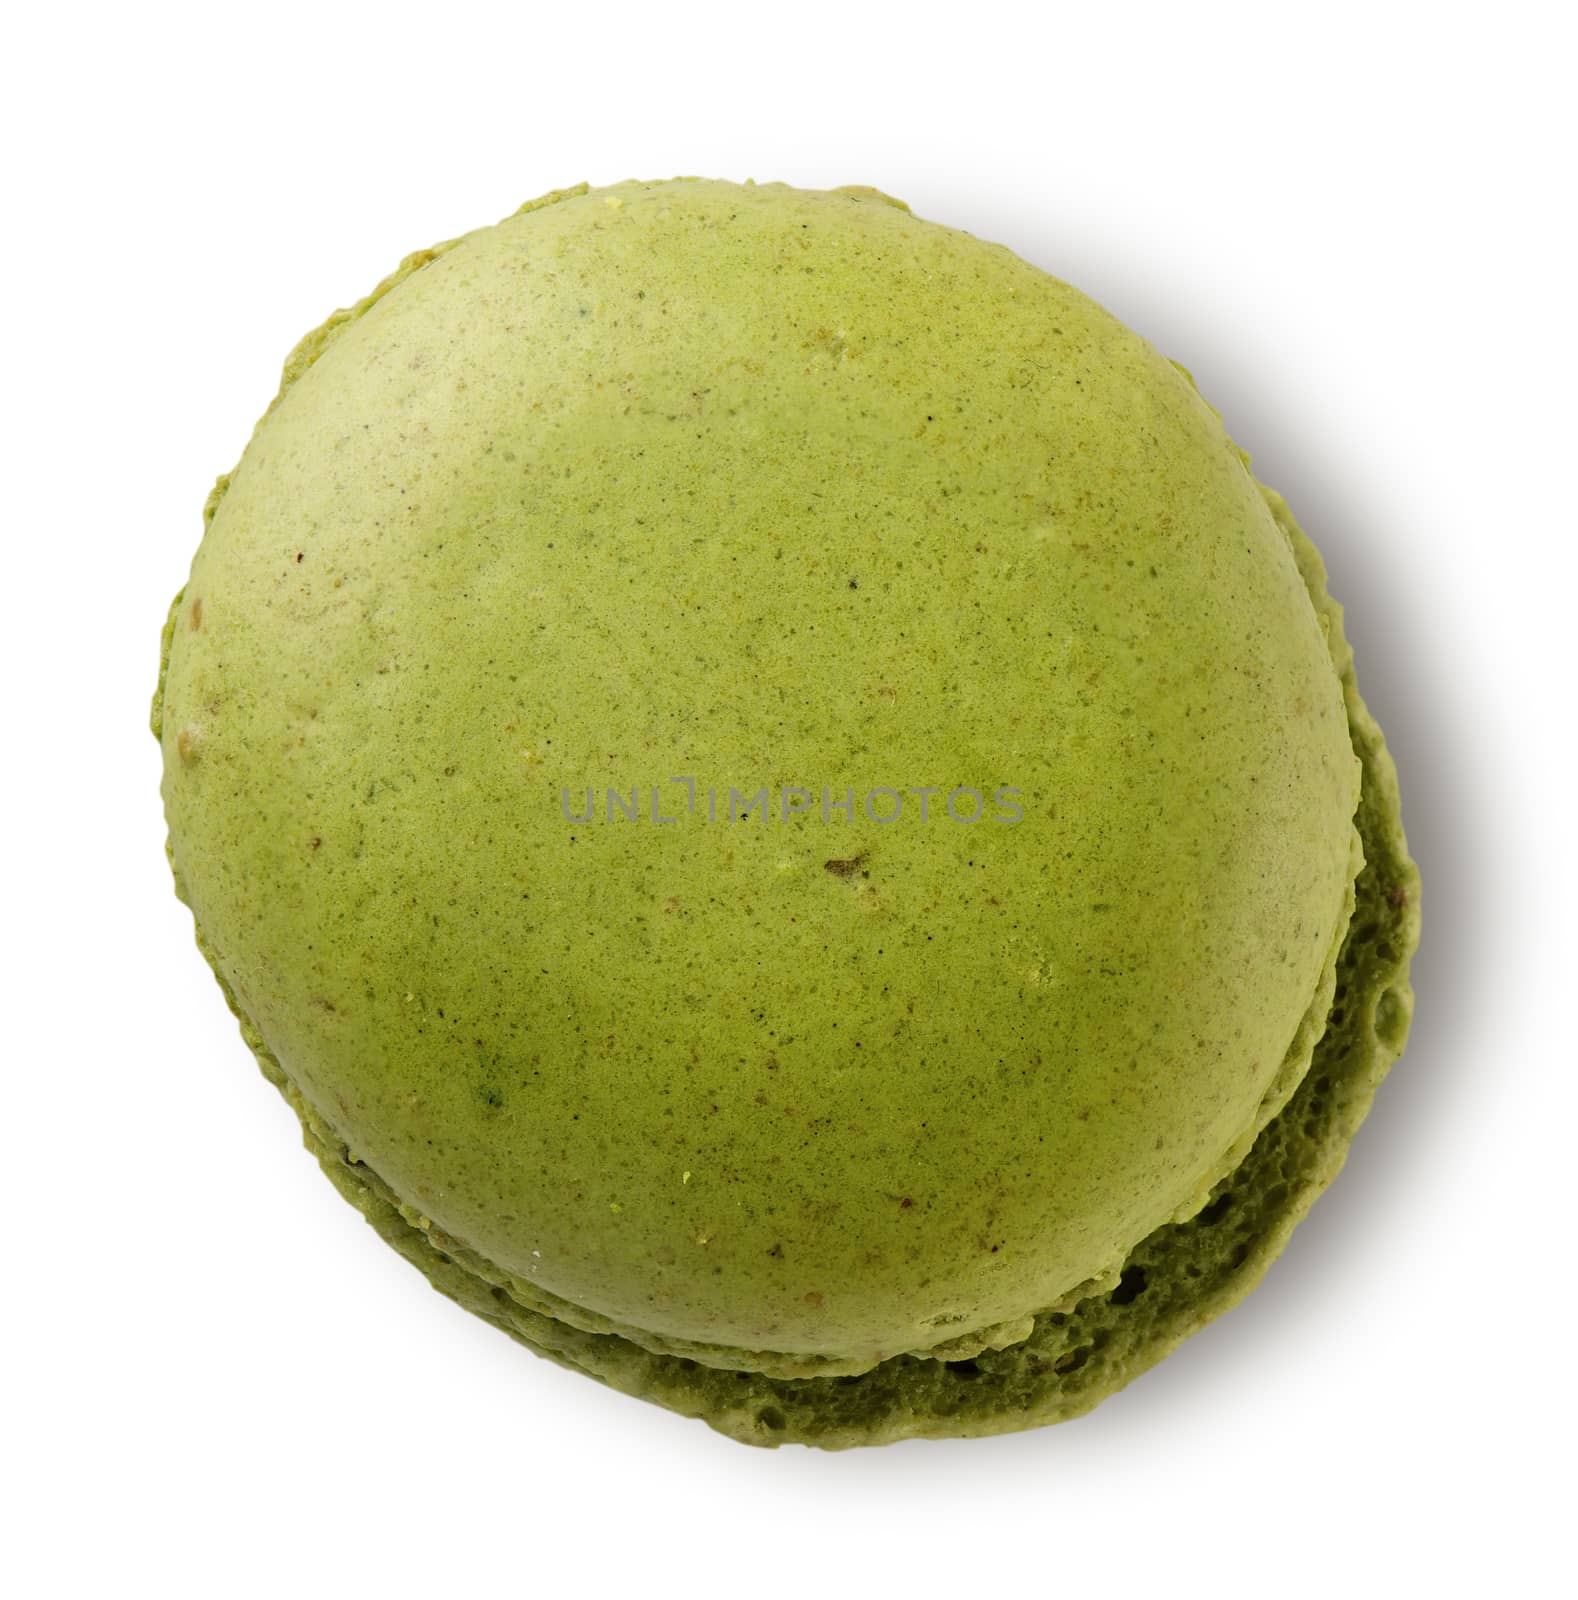 Green pistachio macaron by Givaga